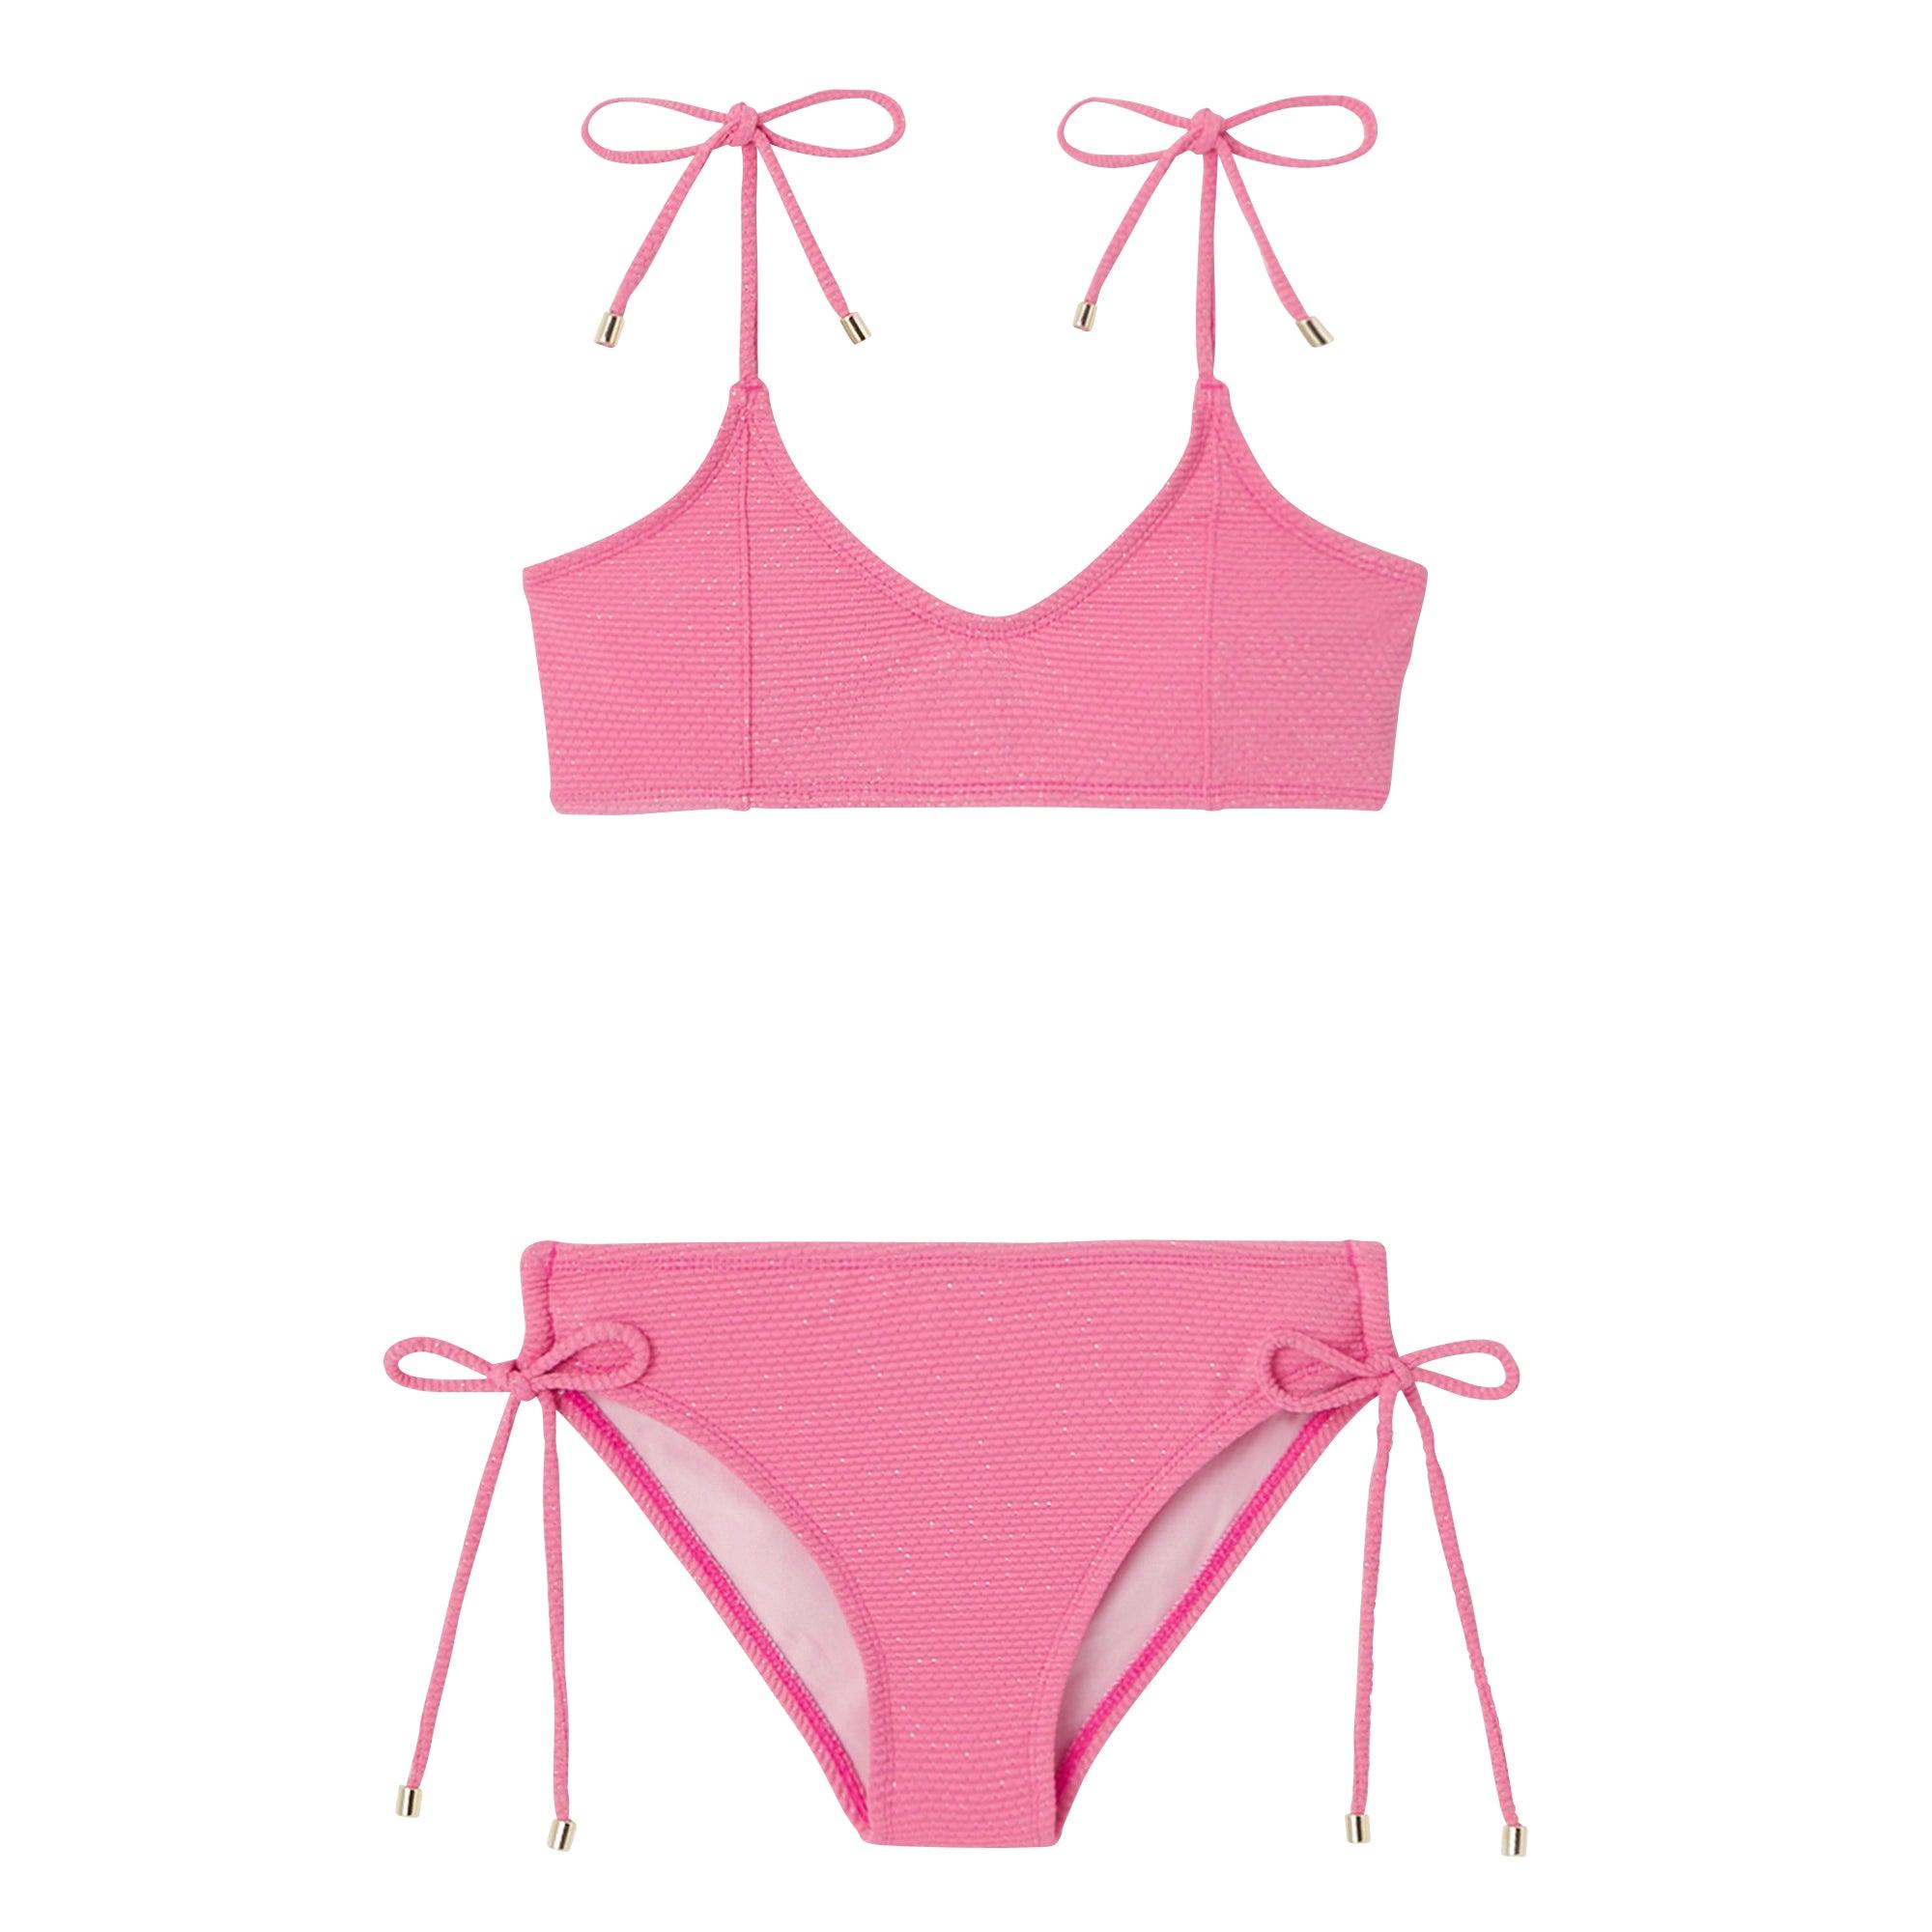 Bikini fille rose / or - Lison Paris